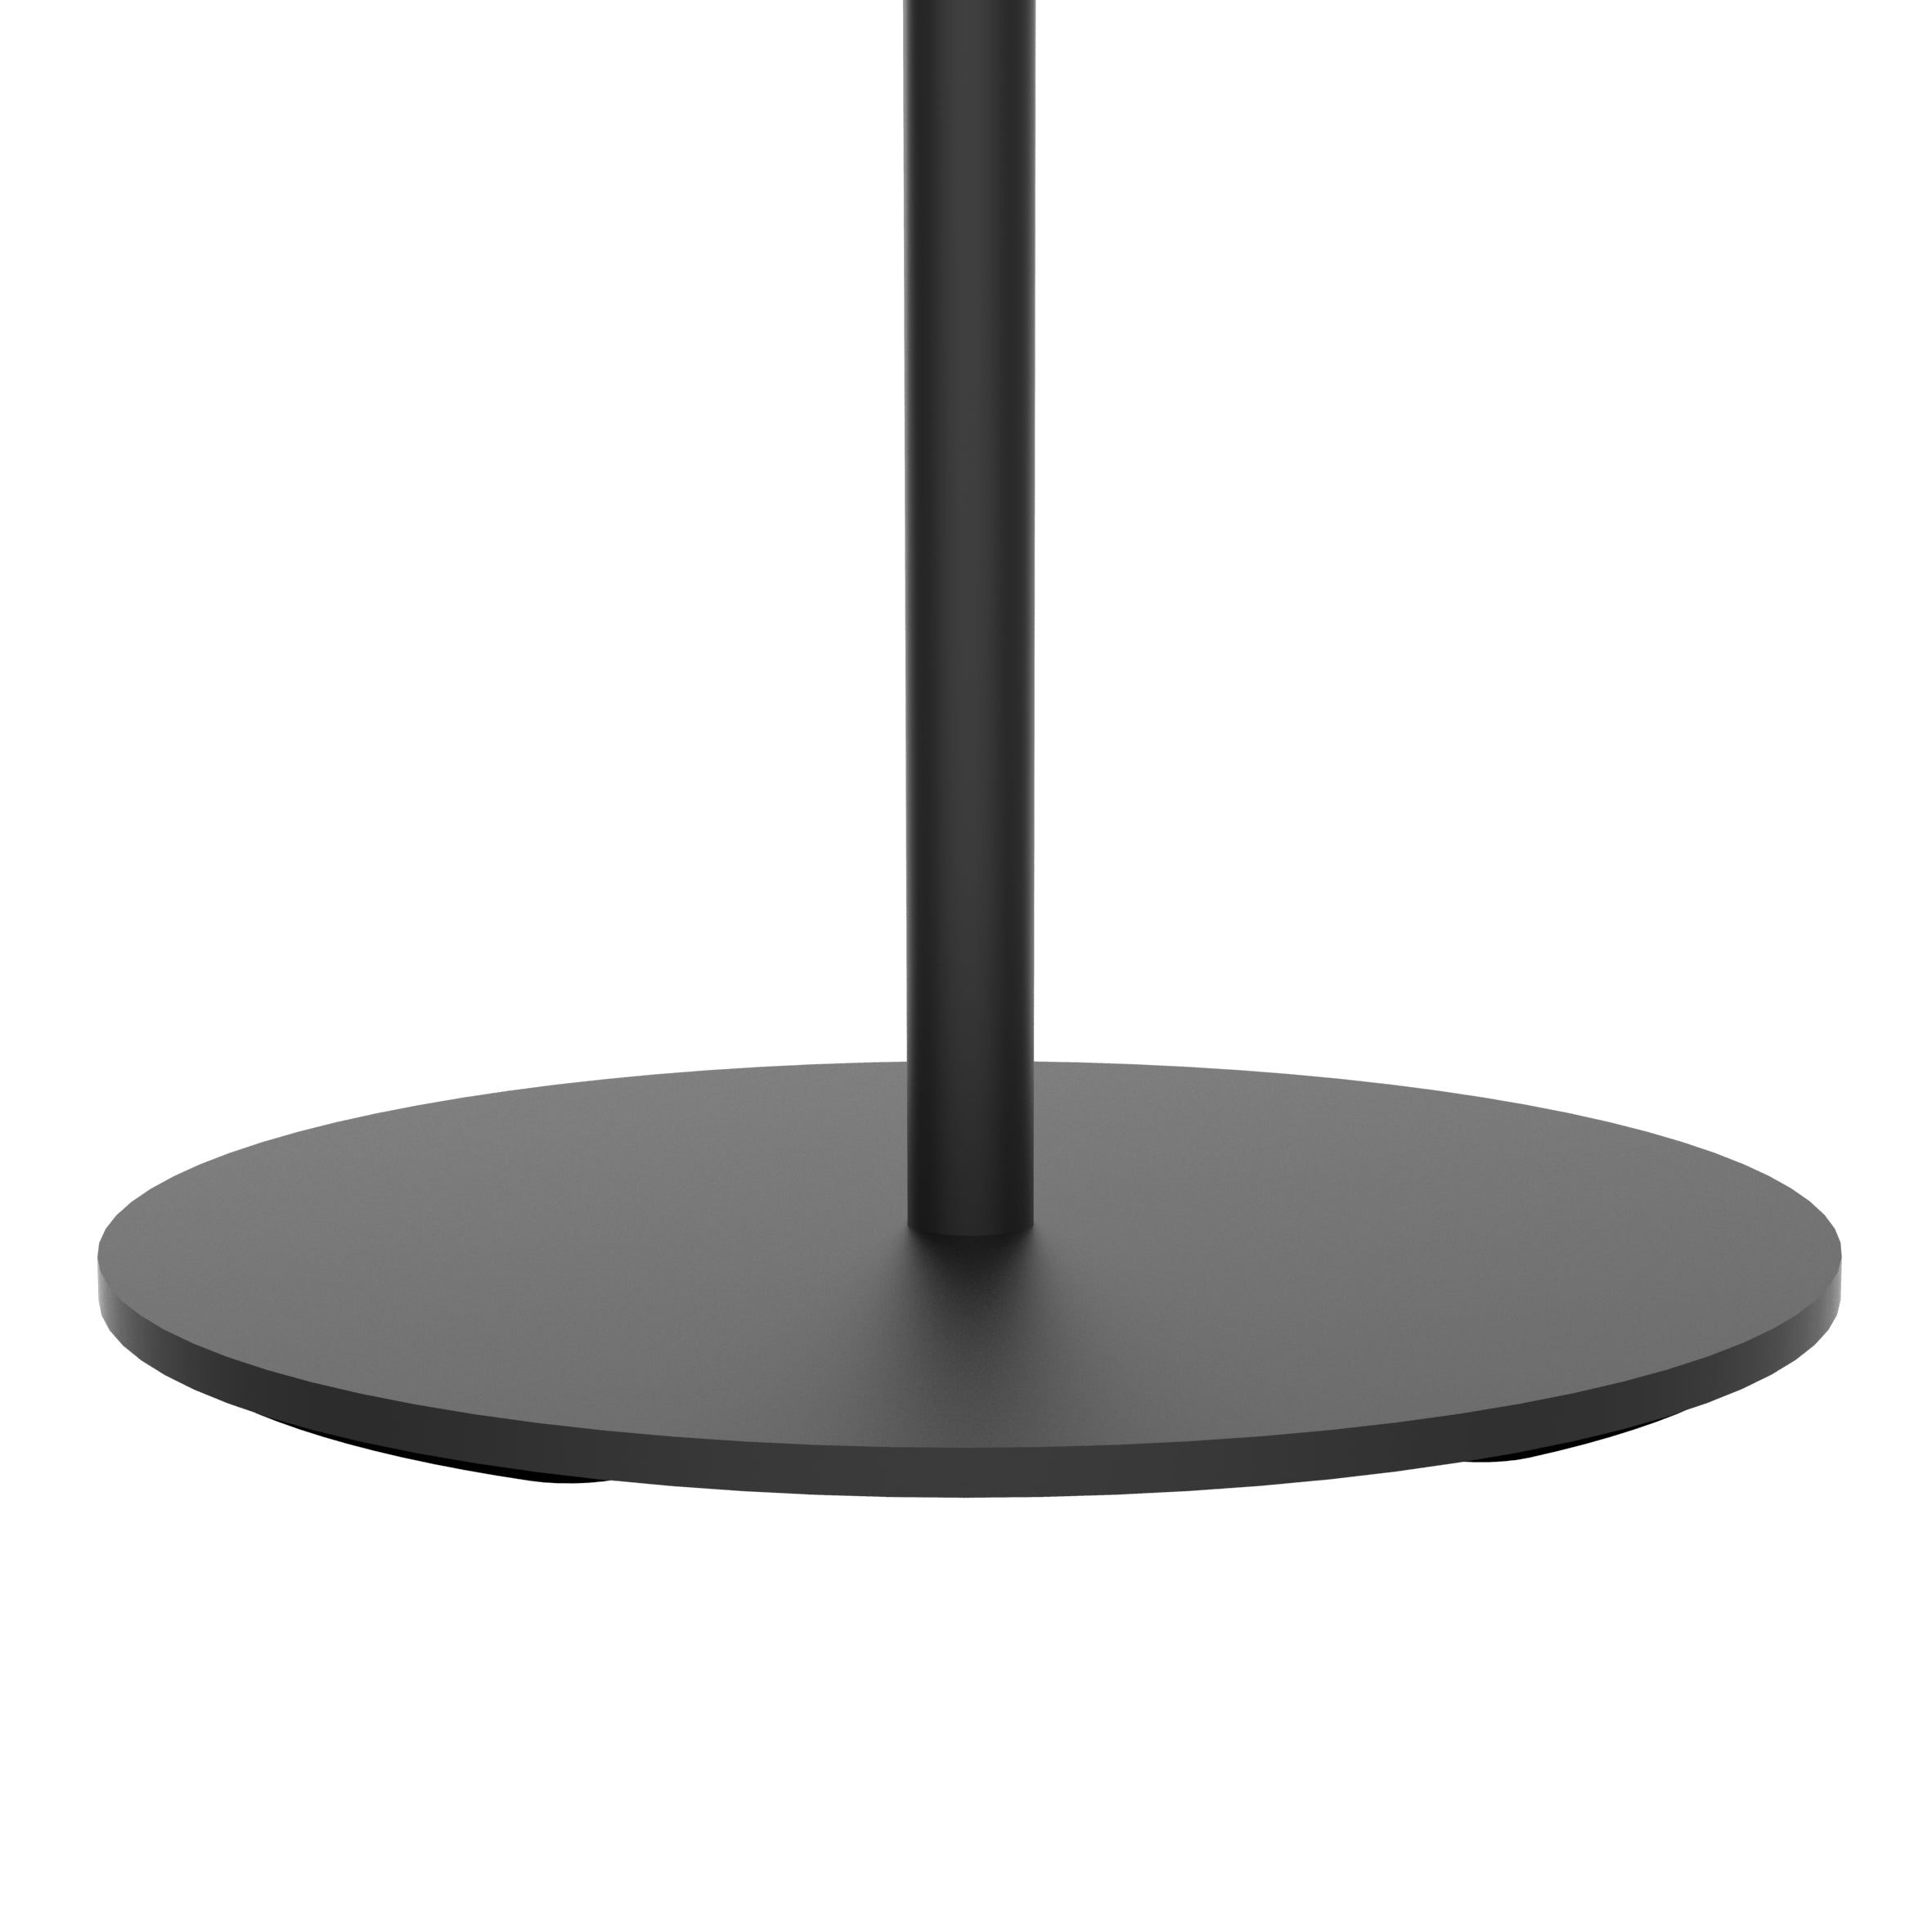 Yeelight 4-in-1 Rechargeable Desk Lamp - The Time Machine - Jordan